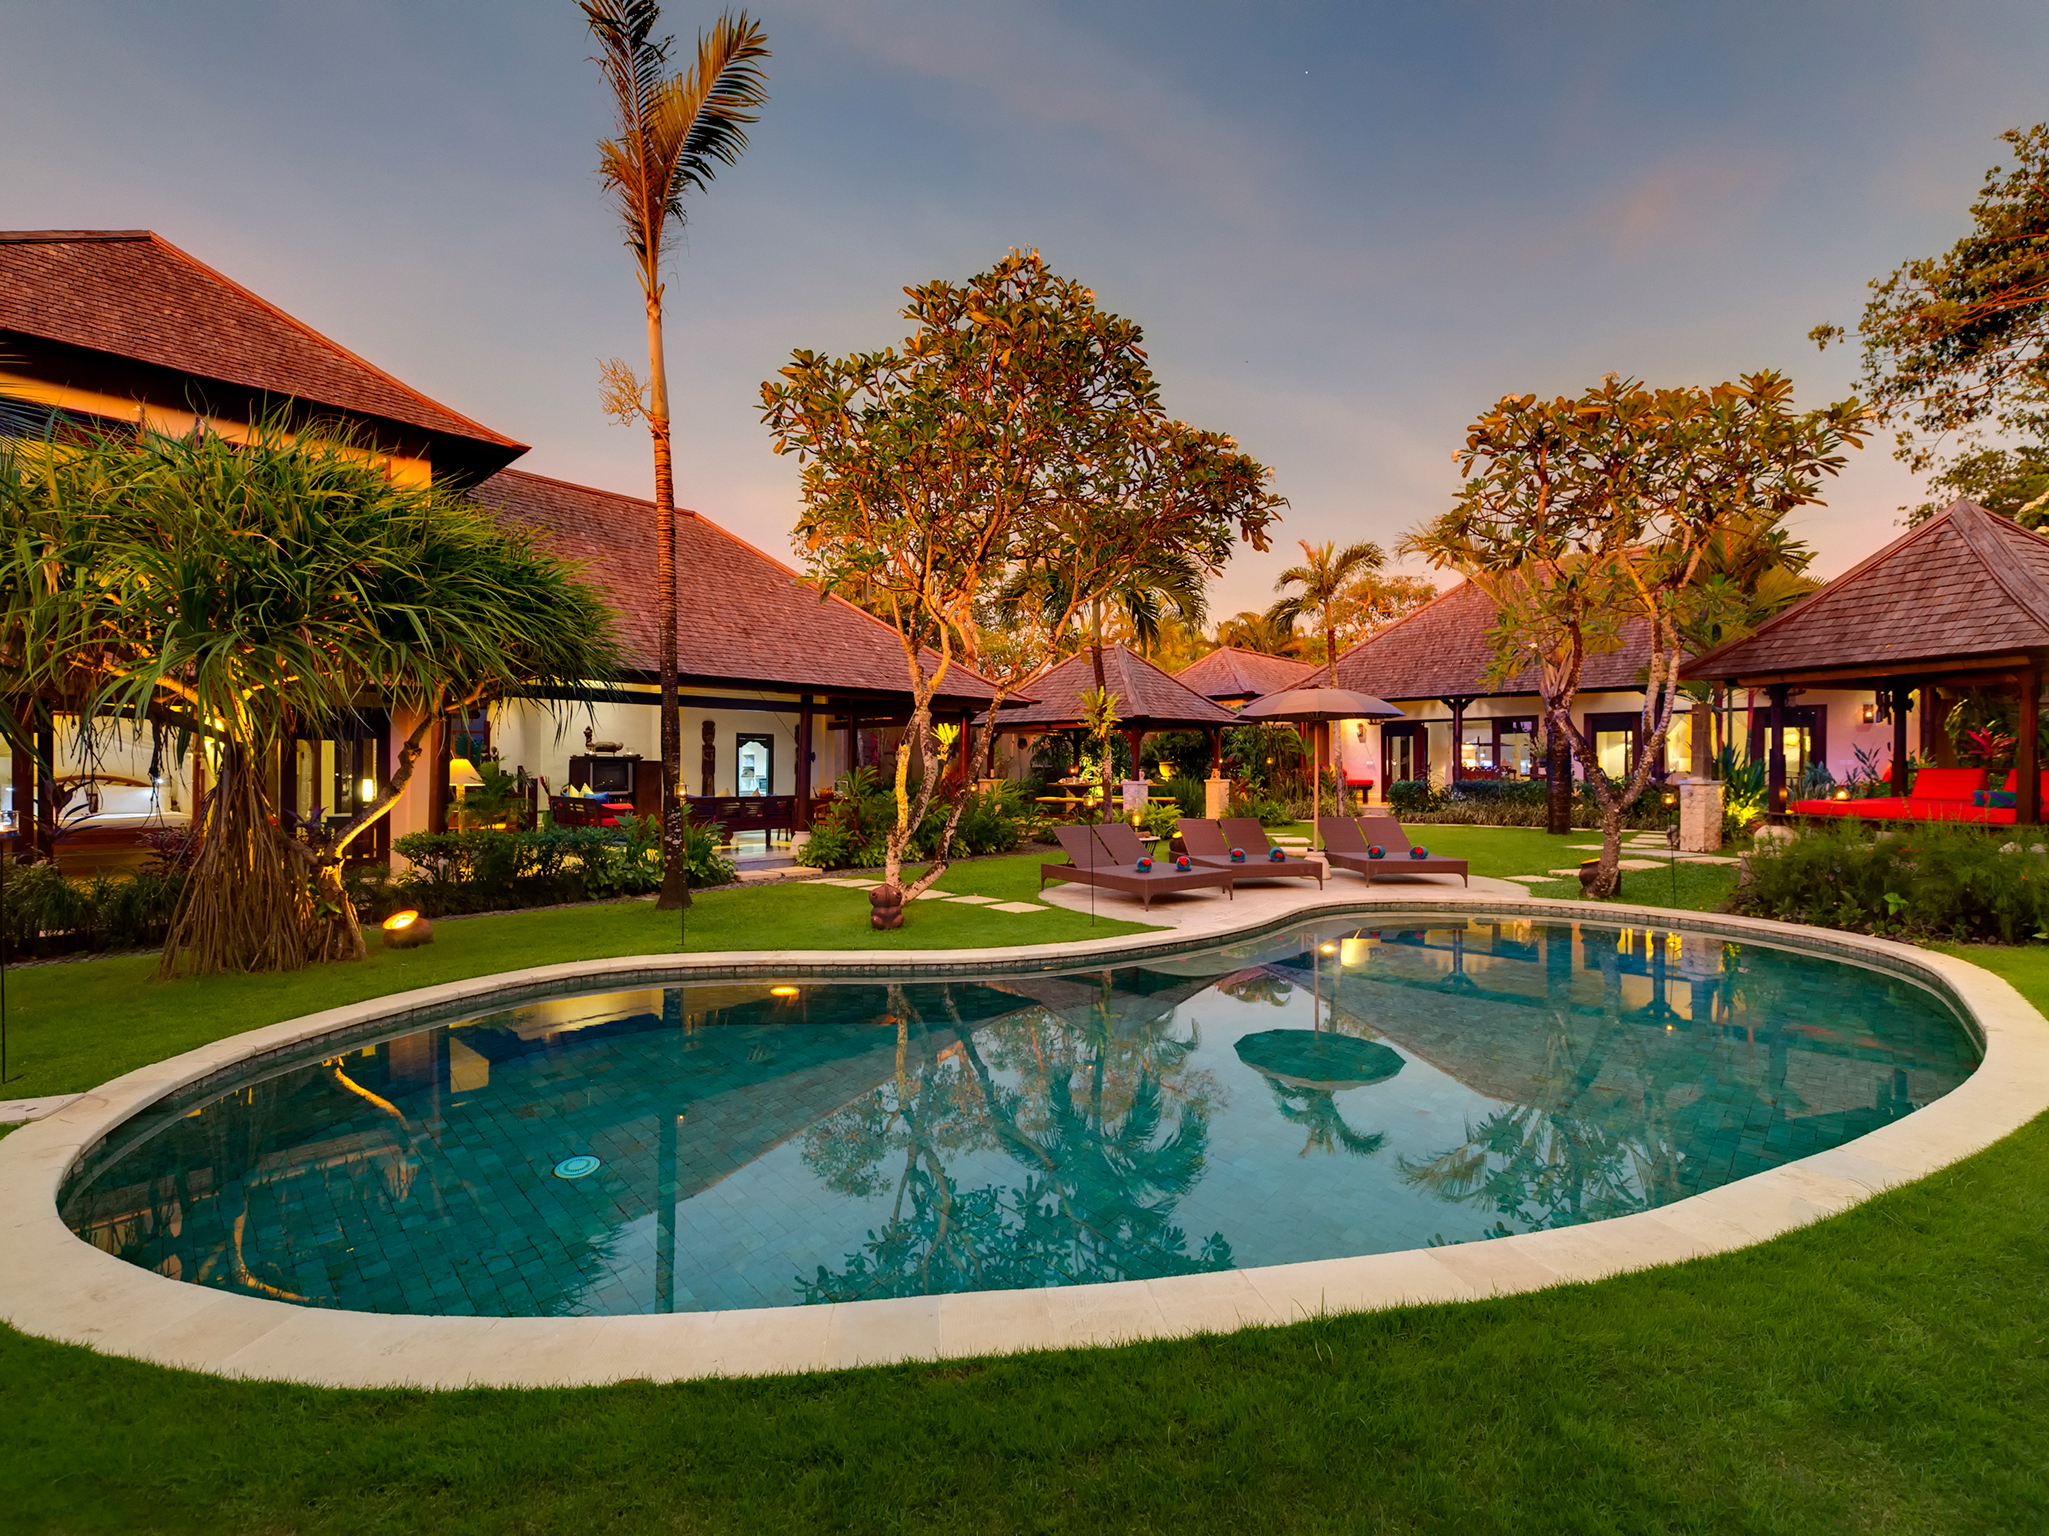 15. Villa Kakatua - Pool and villa at sunset - Villa Kakatua, Canggu, Bali